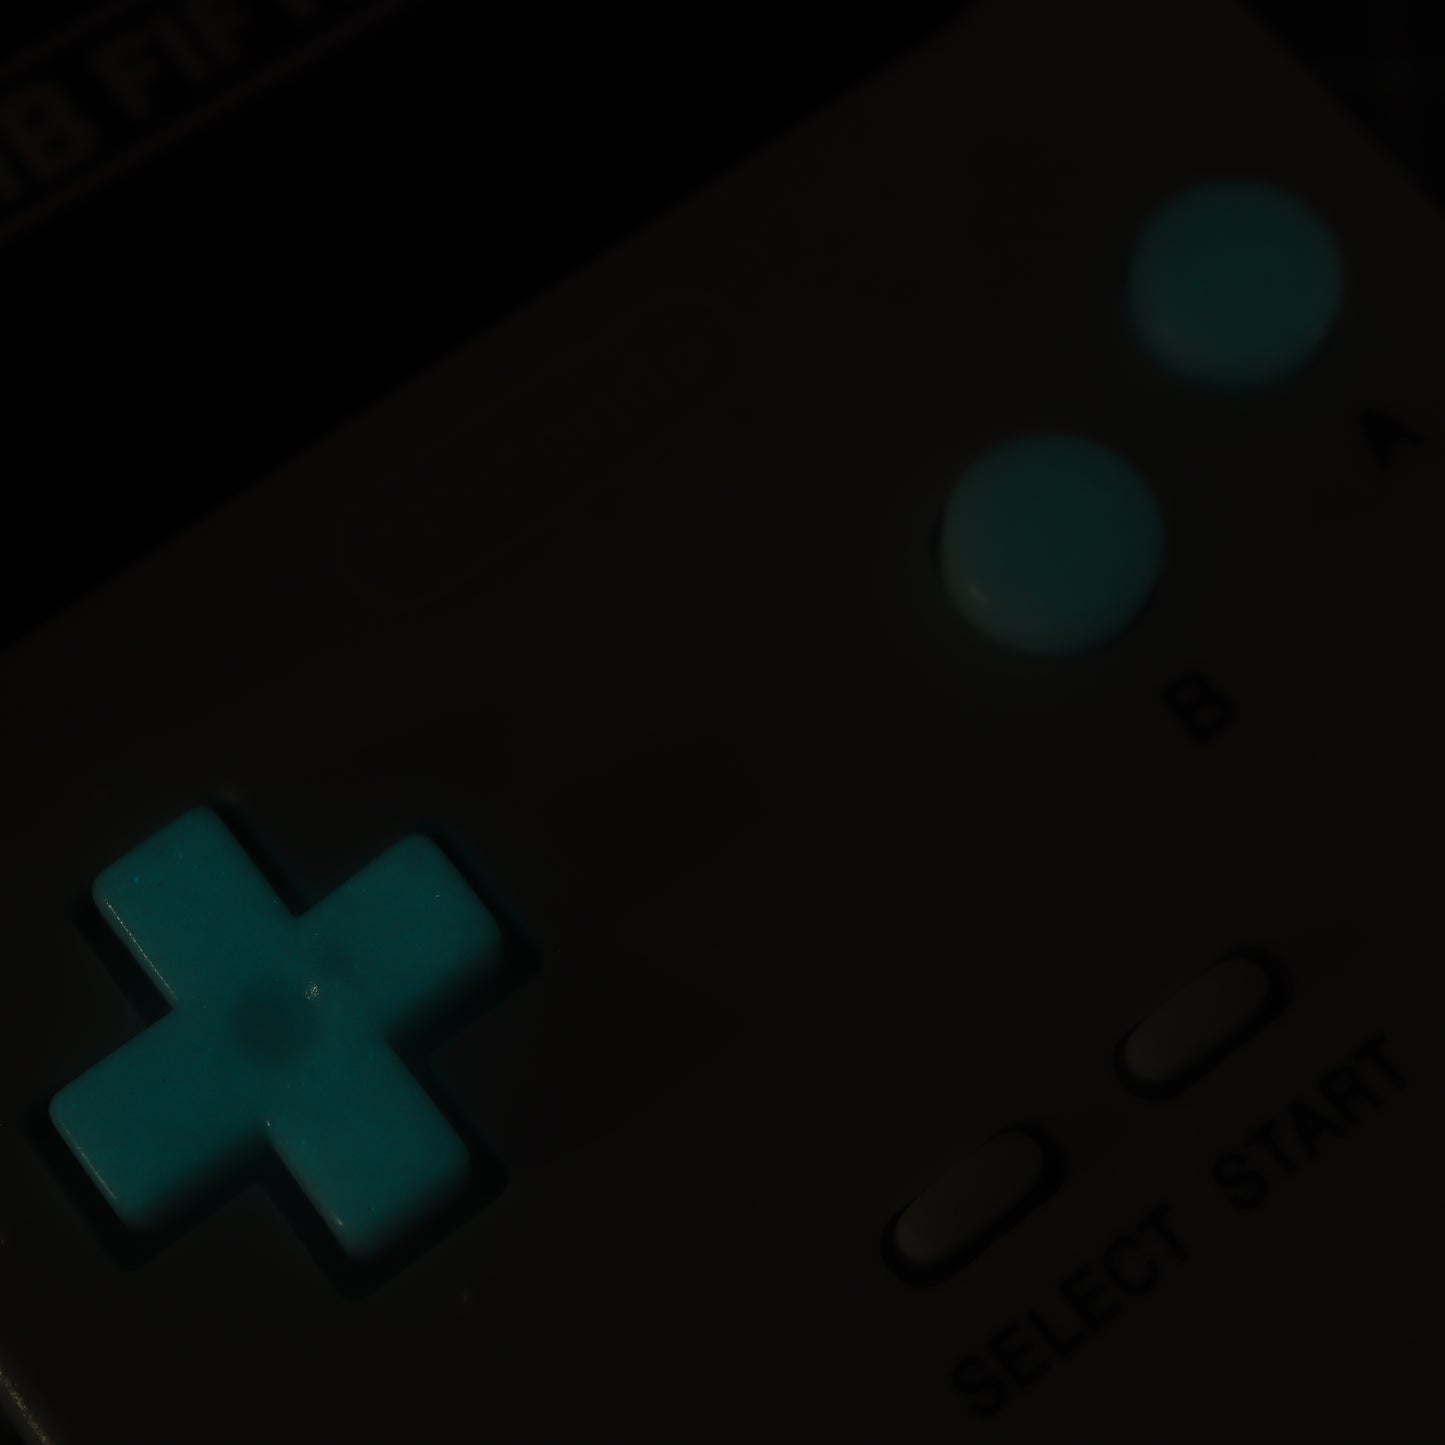 Game Boy Pocket - Custom Button - GITD Aqua